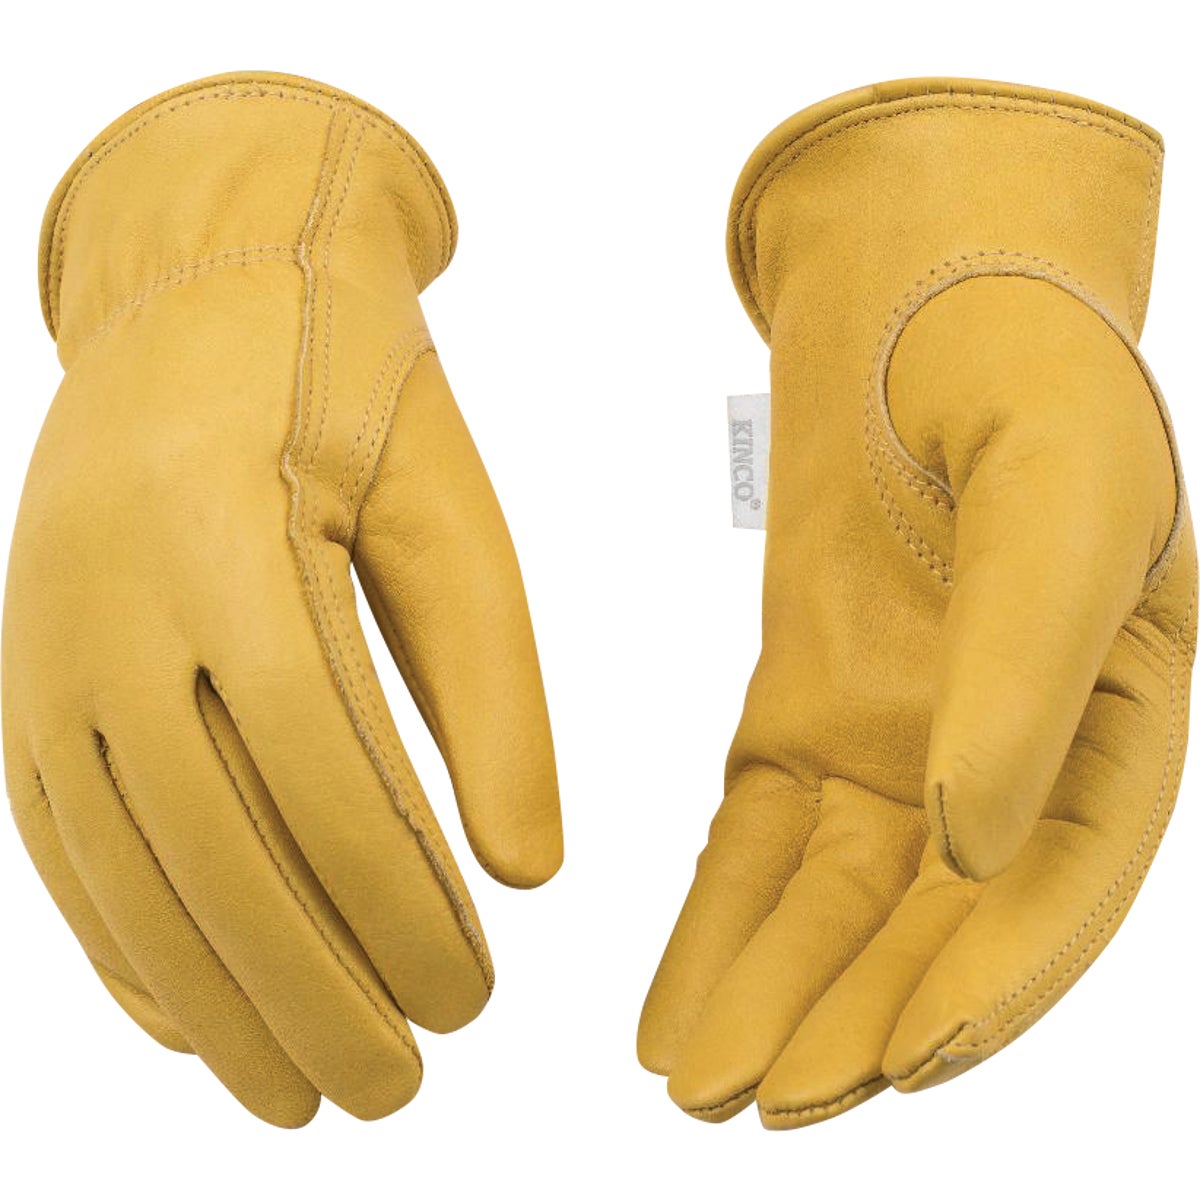 Kinco Men's XL Full Grain Cowhide Winter Work Glove